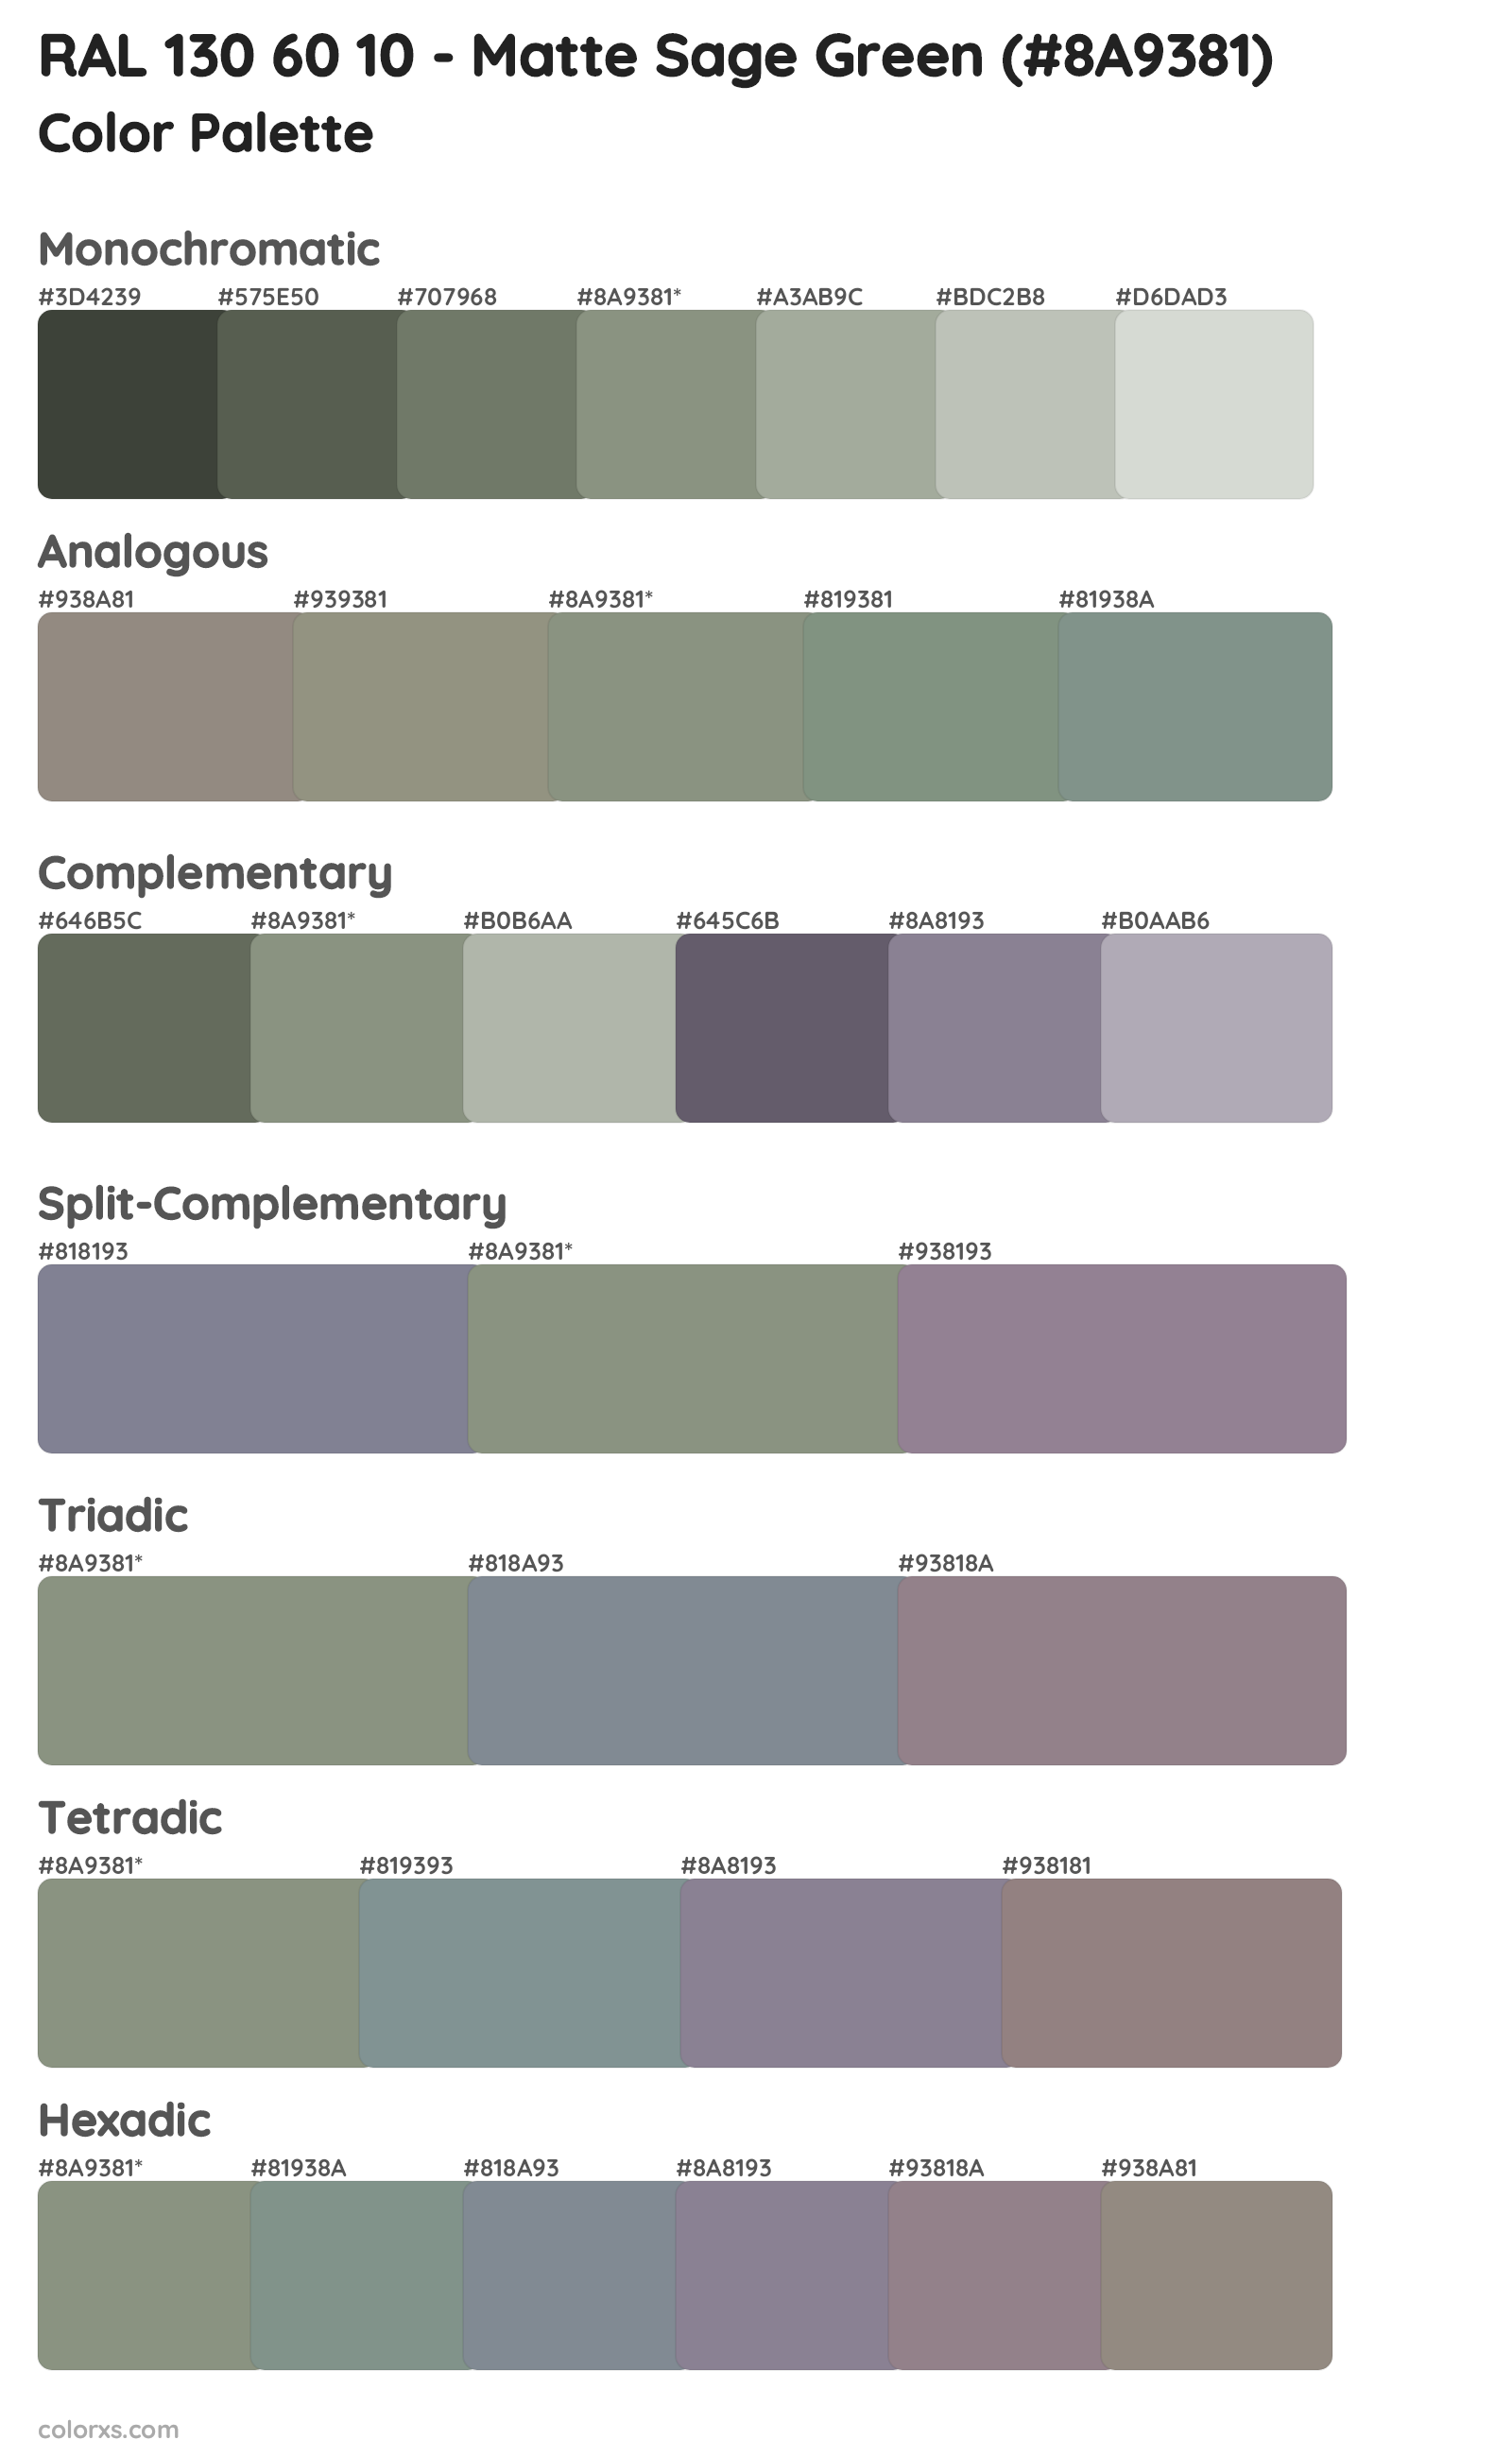 RAL 130 60 10 - Matte Sage Green Color Scheme Palettes